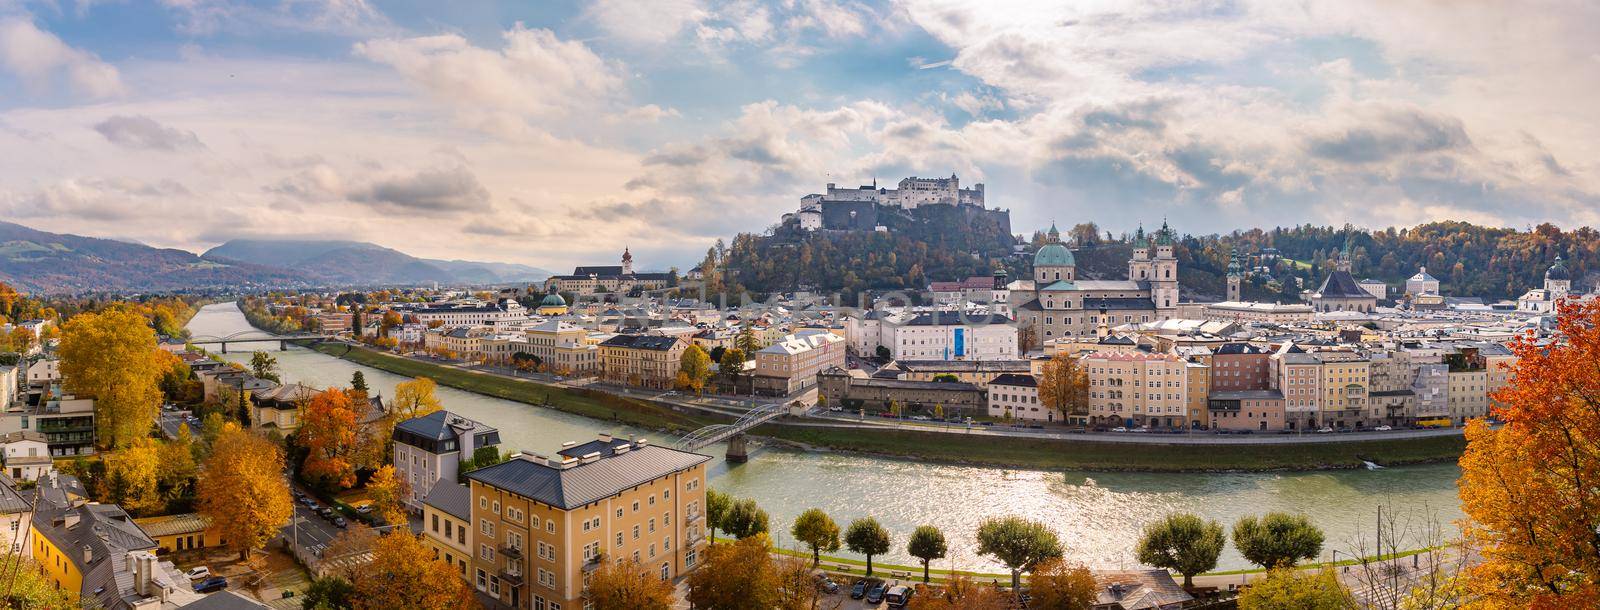 Salzburg old city in autumn, colorful sunshine, Austria. Panorama by Daxenbichler